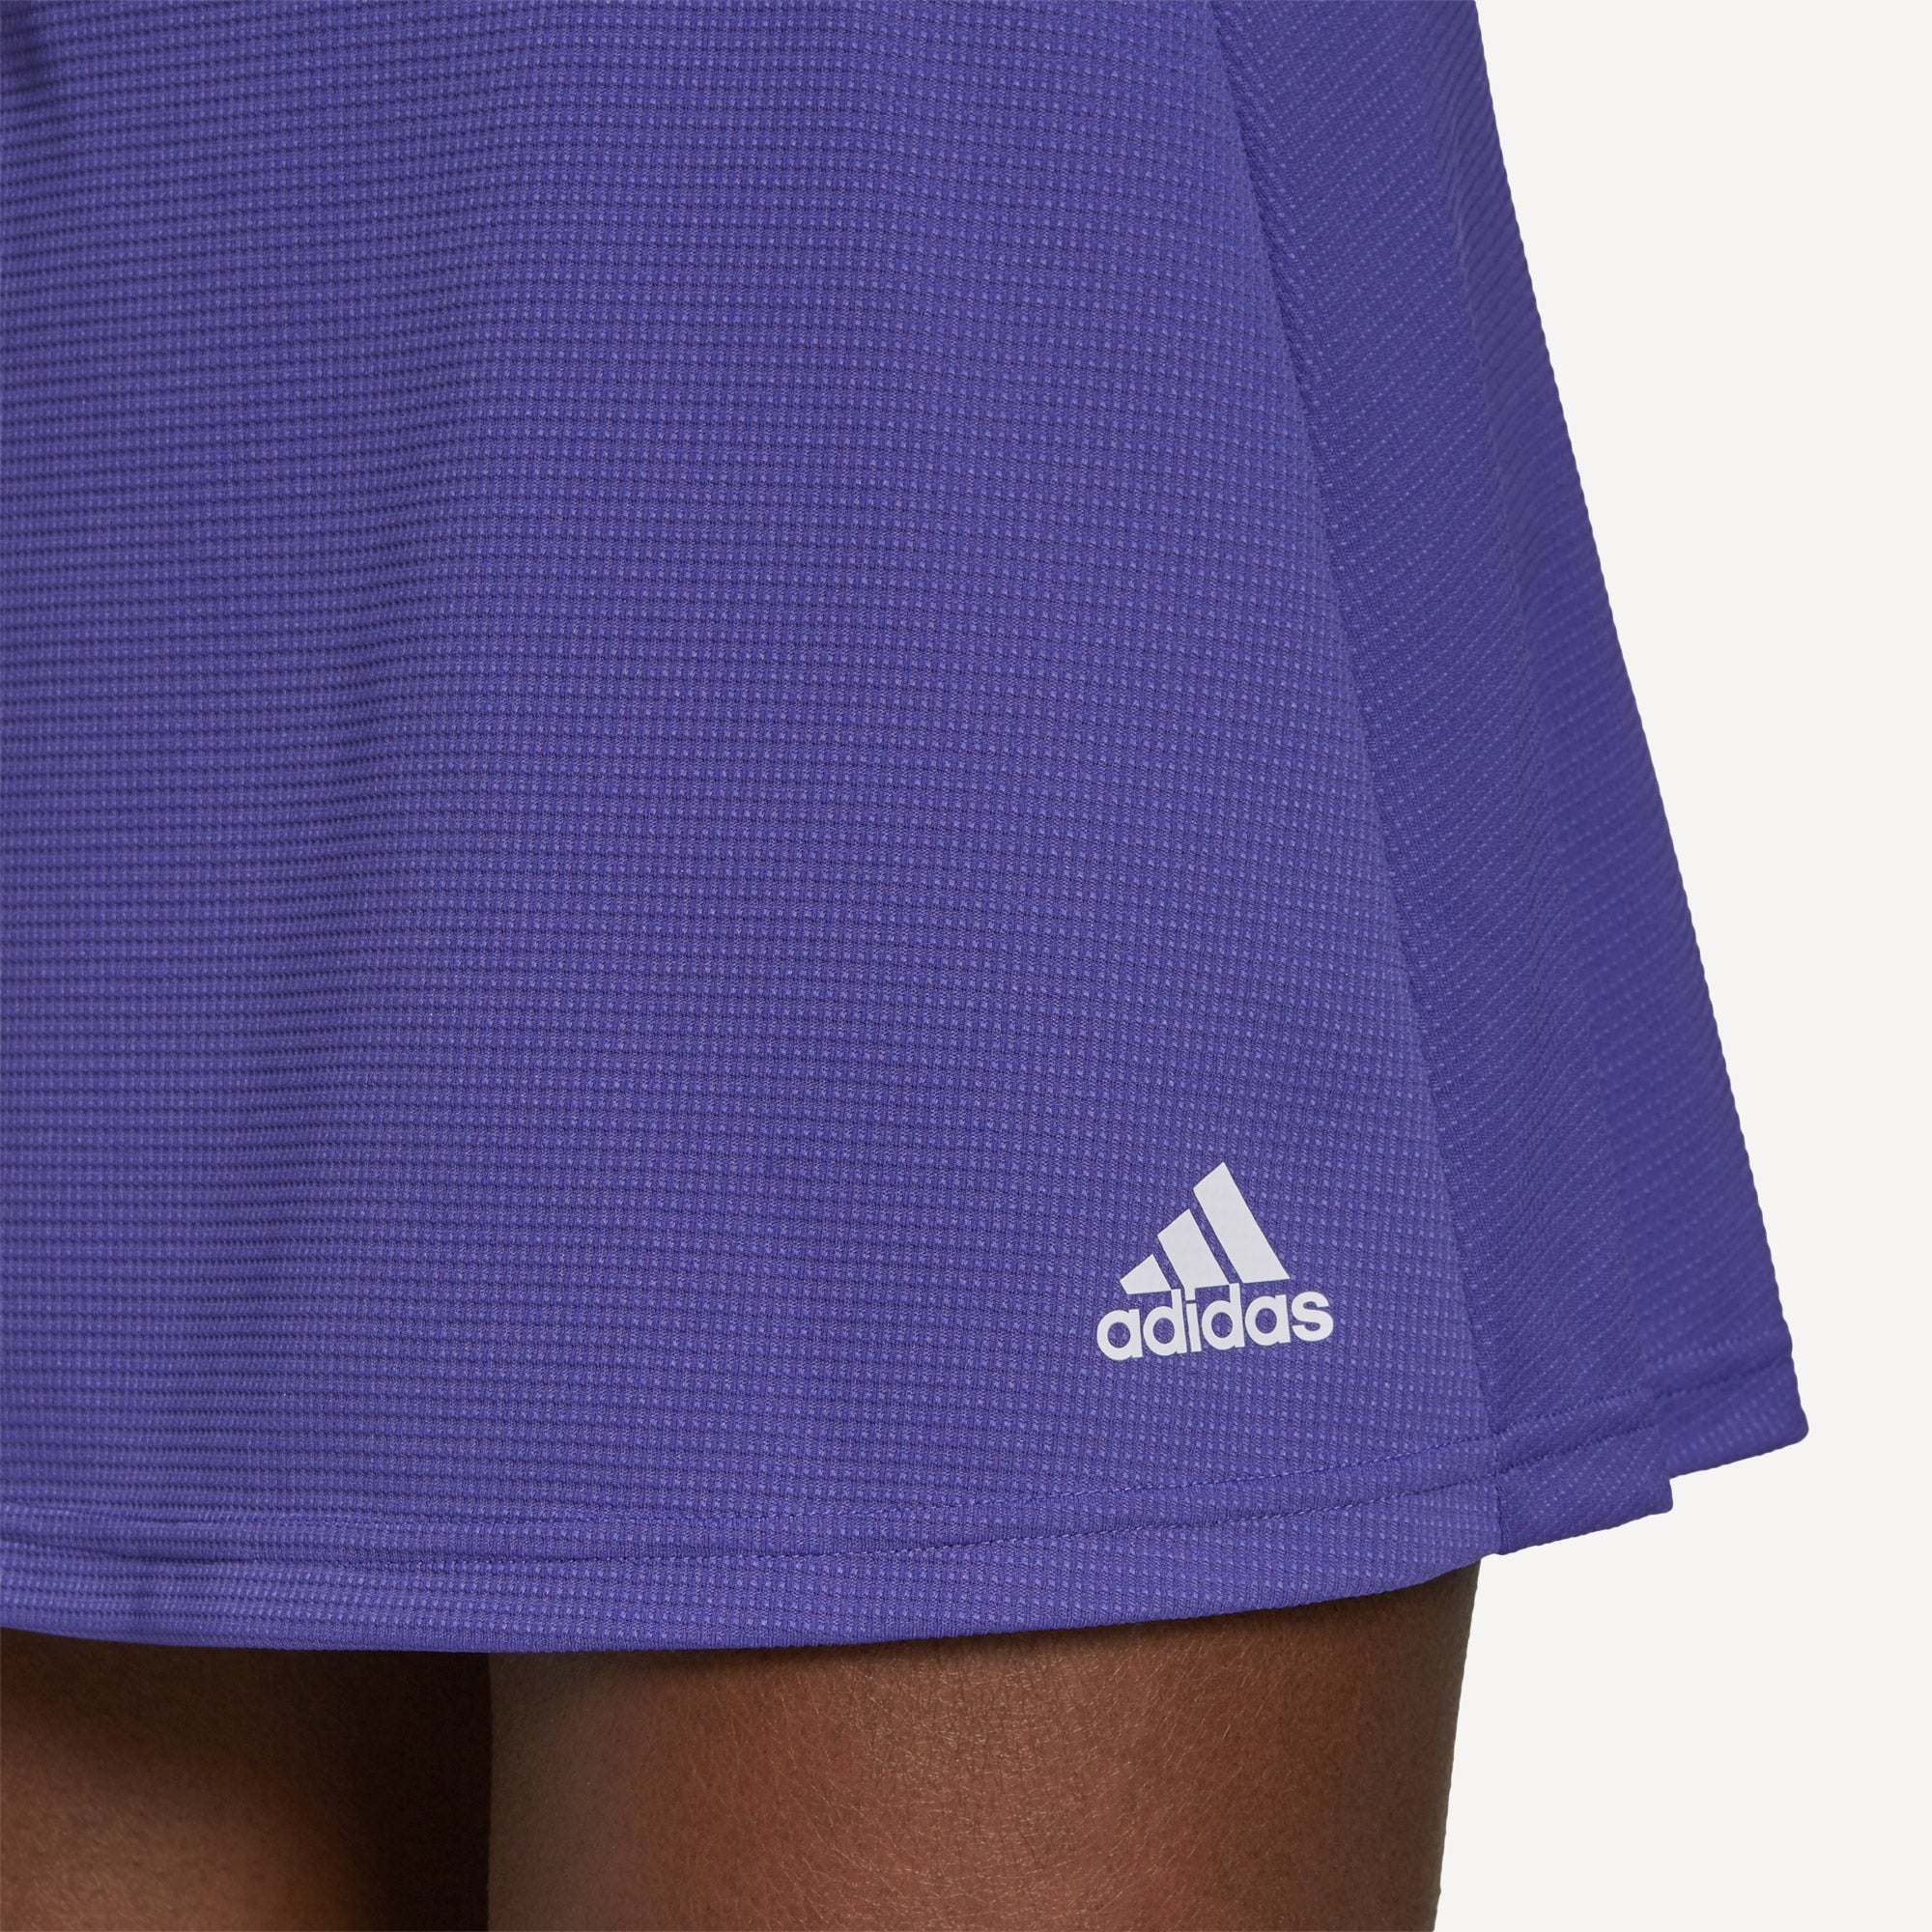 adidas Club Women's Tennis Skirt Purple (4)